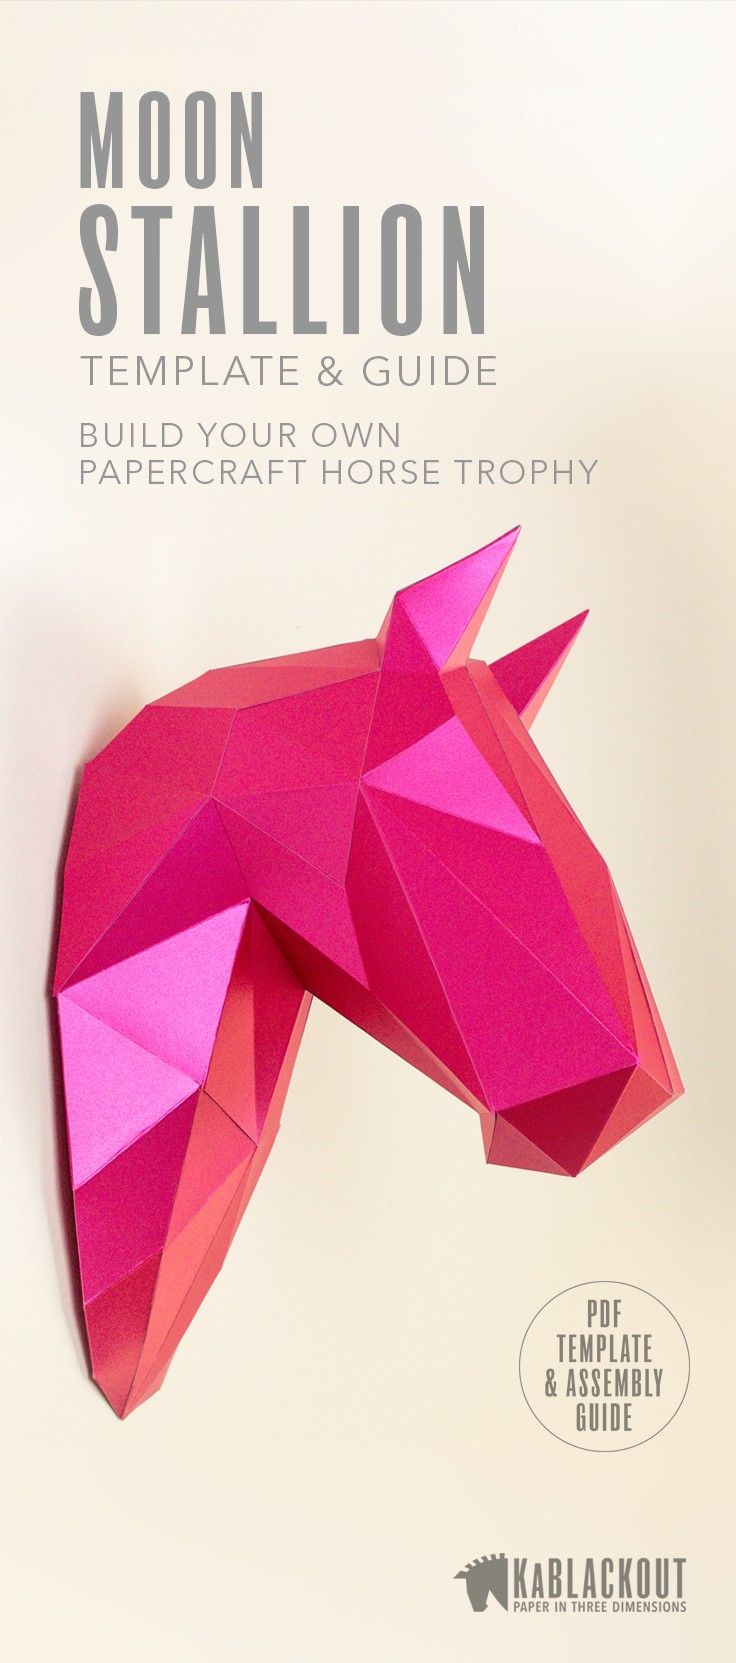 Printable Papercraft Trophy